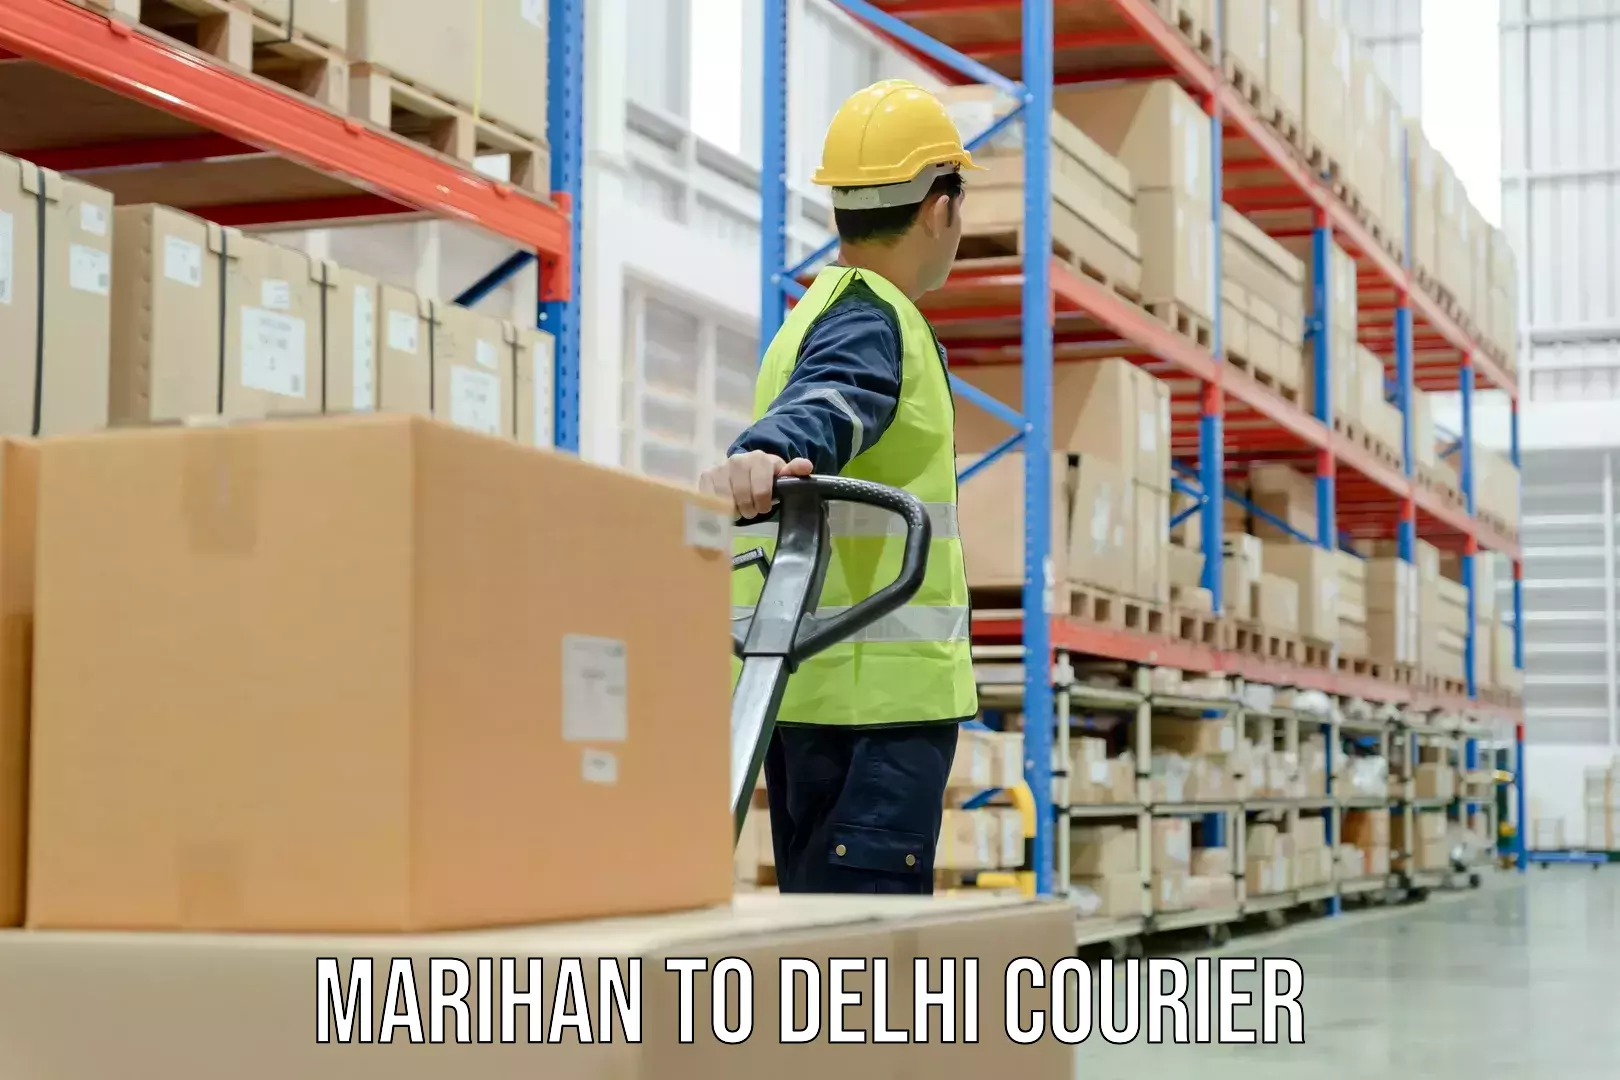 Courier service comparison Marihan to Delhi